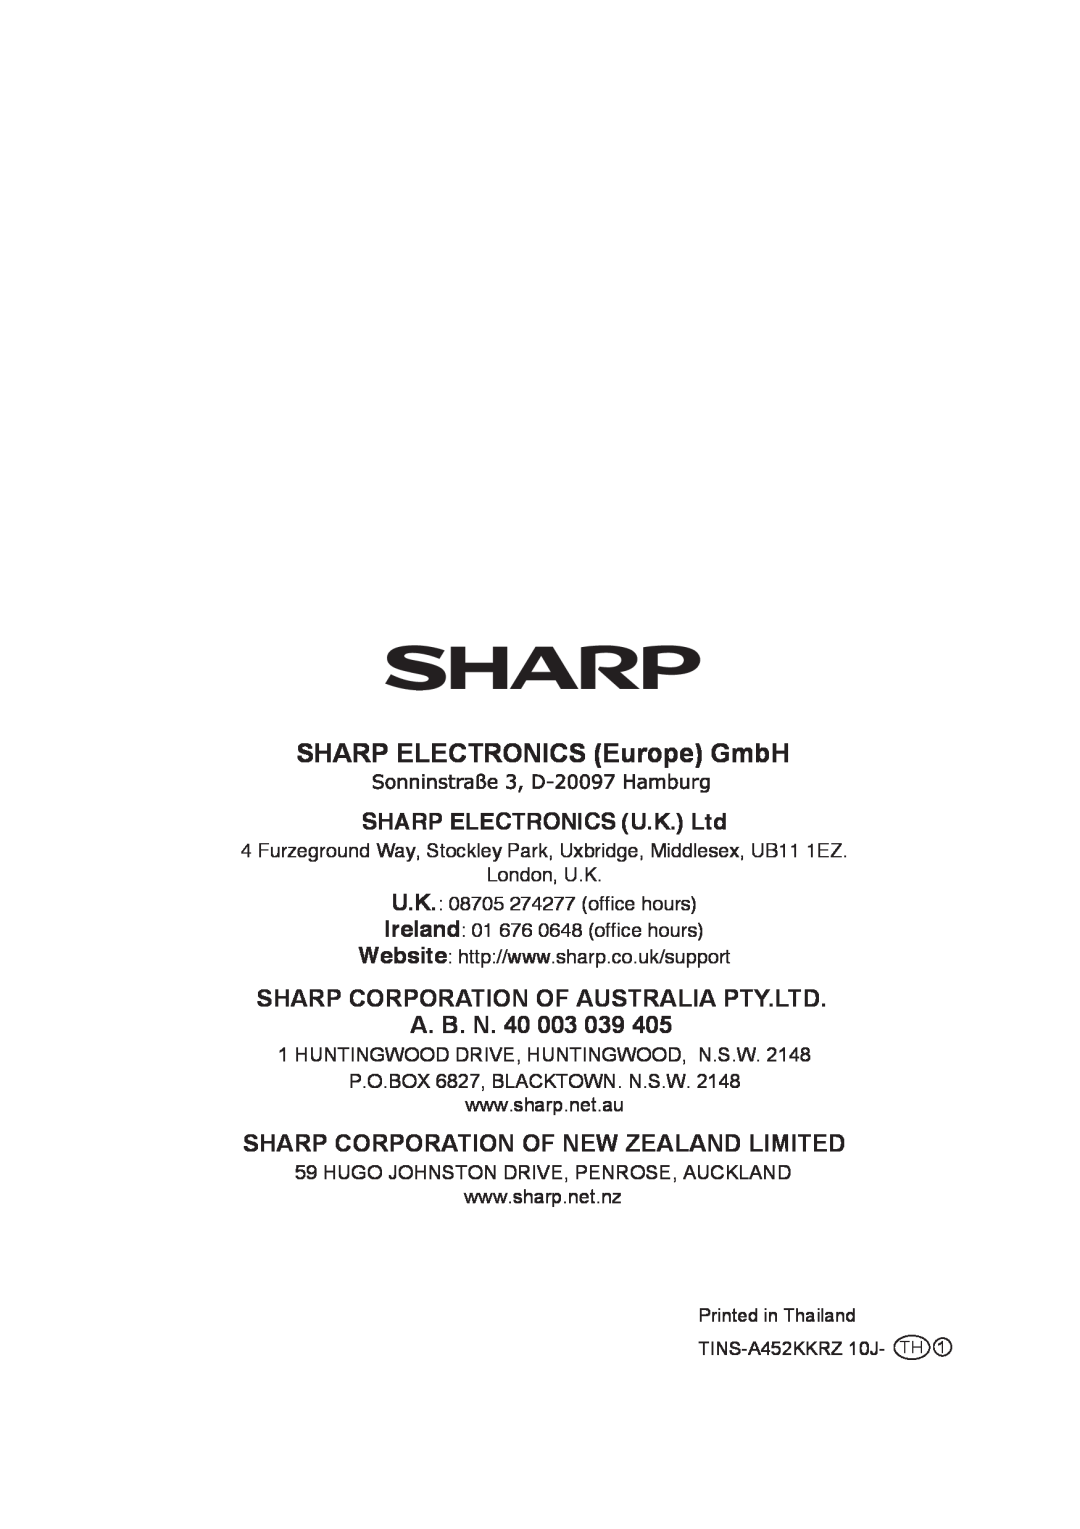 Sharp IG-BC2J SHARP ELECTRONICS Europe GmbH, A. B. N, Sharp Corporation Of New Zealand Limited, London, U.K 